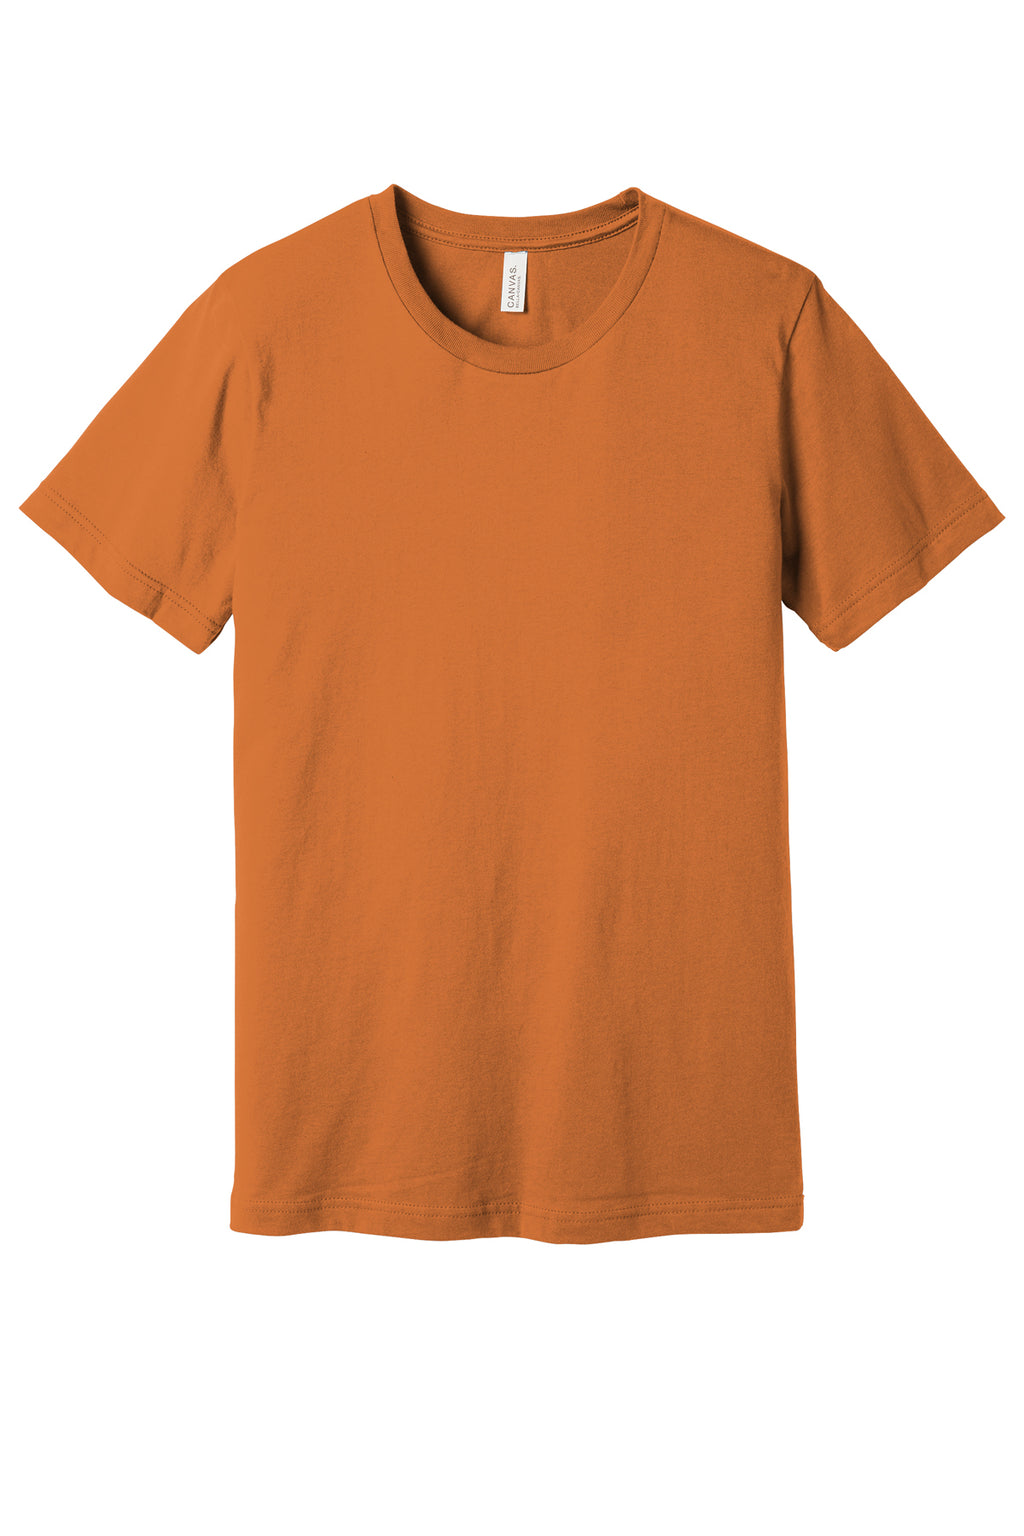 Bella Canvas Mens/Unisex Cotton Short Sleeve Shirts Burnt Orange